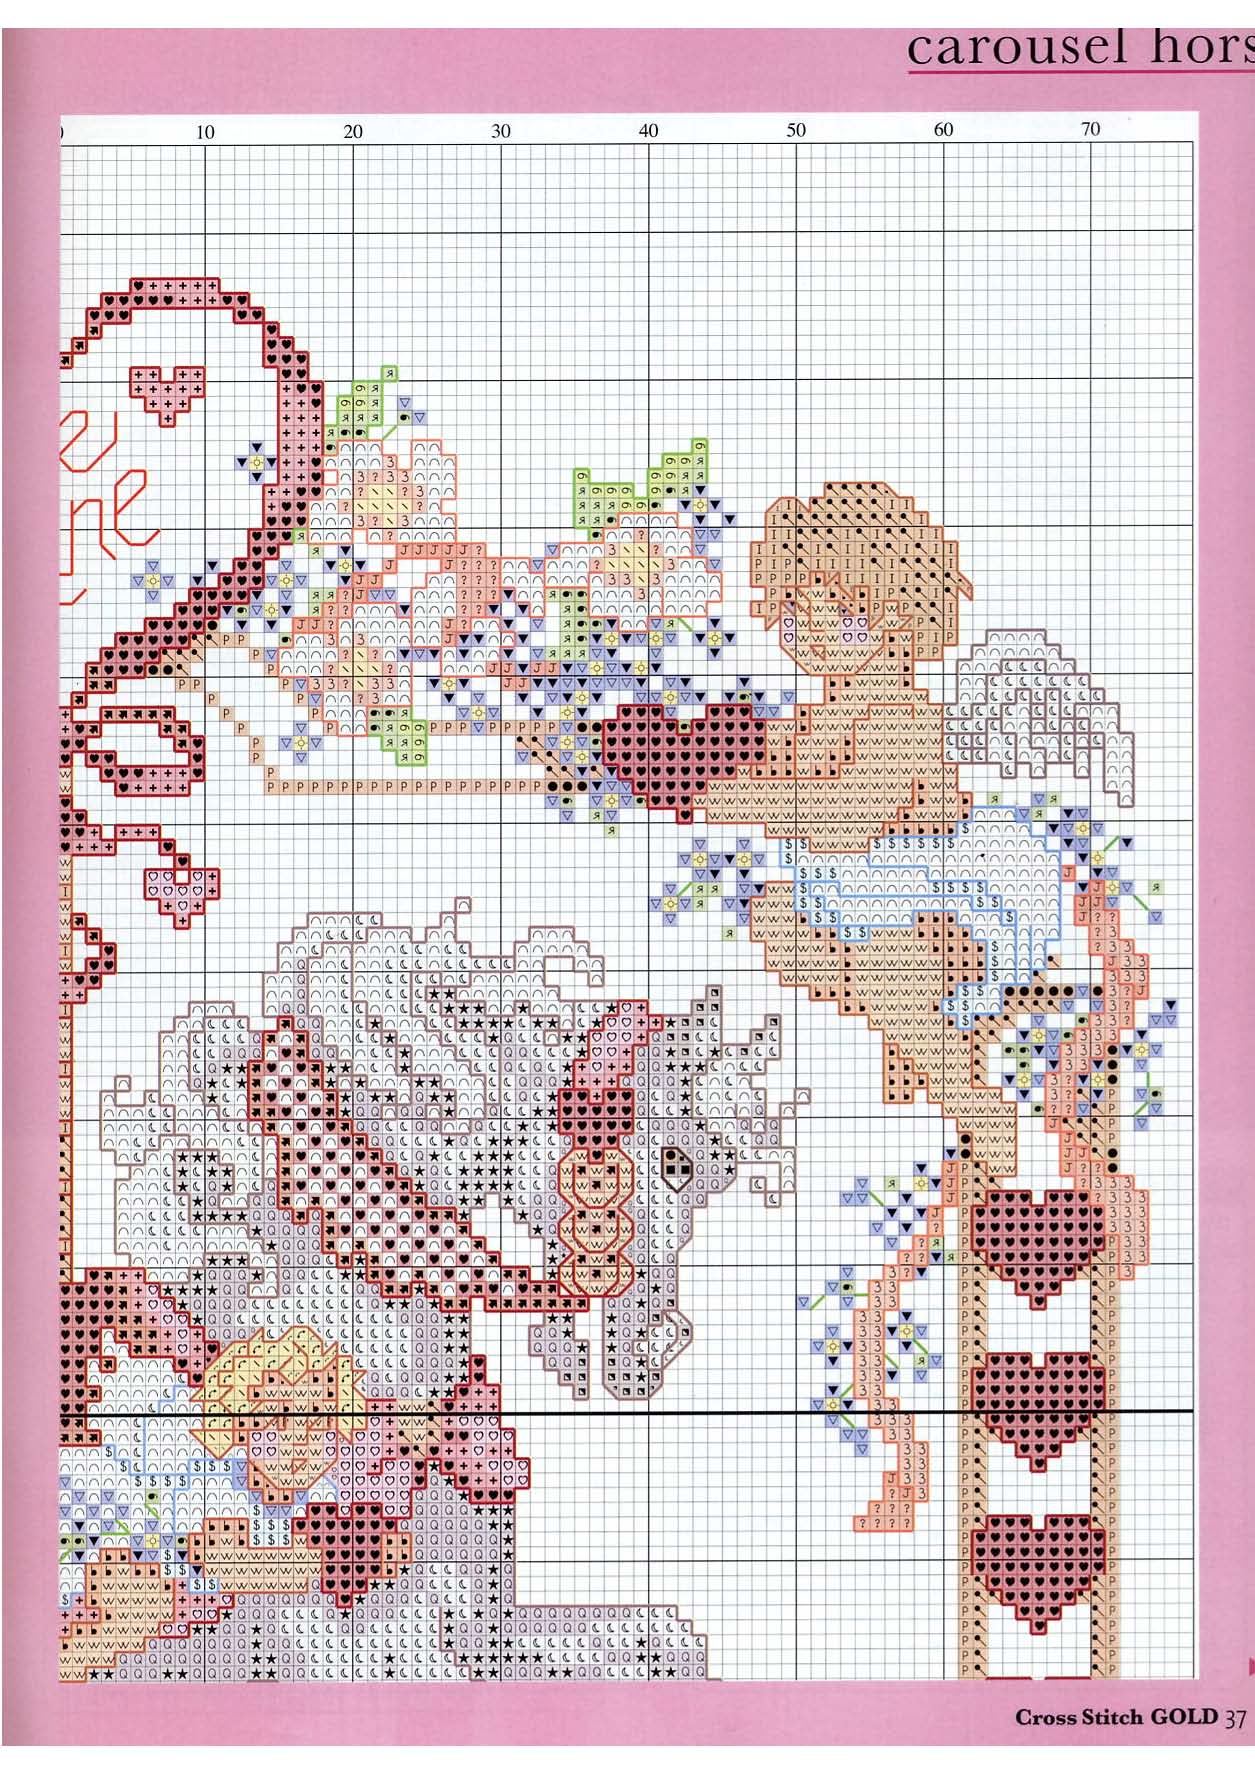 Valentine’ s Day toy carousel free cross stitch pattern (3)